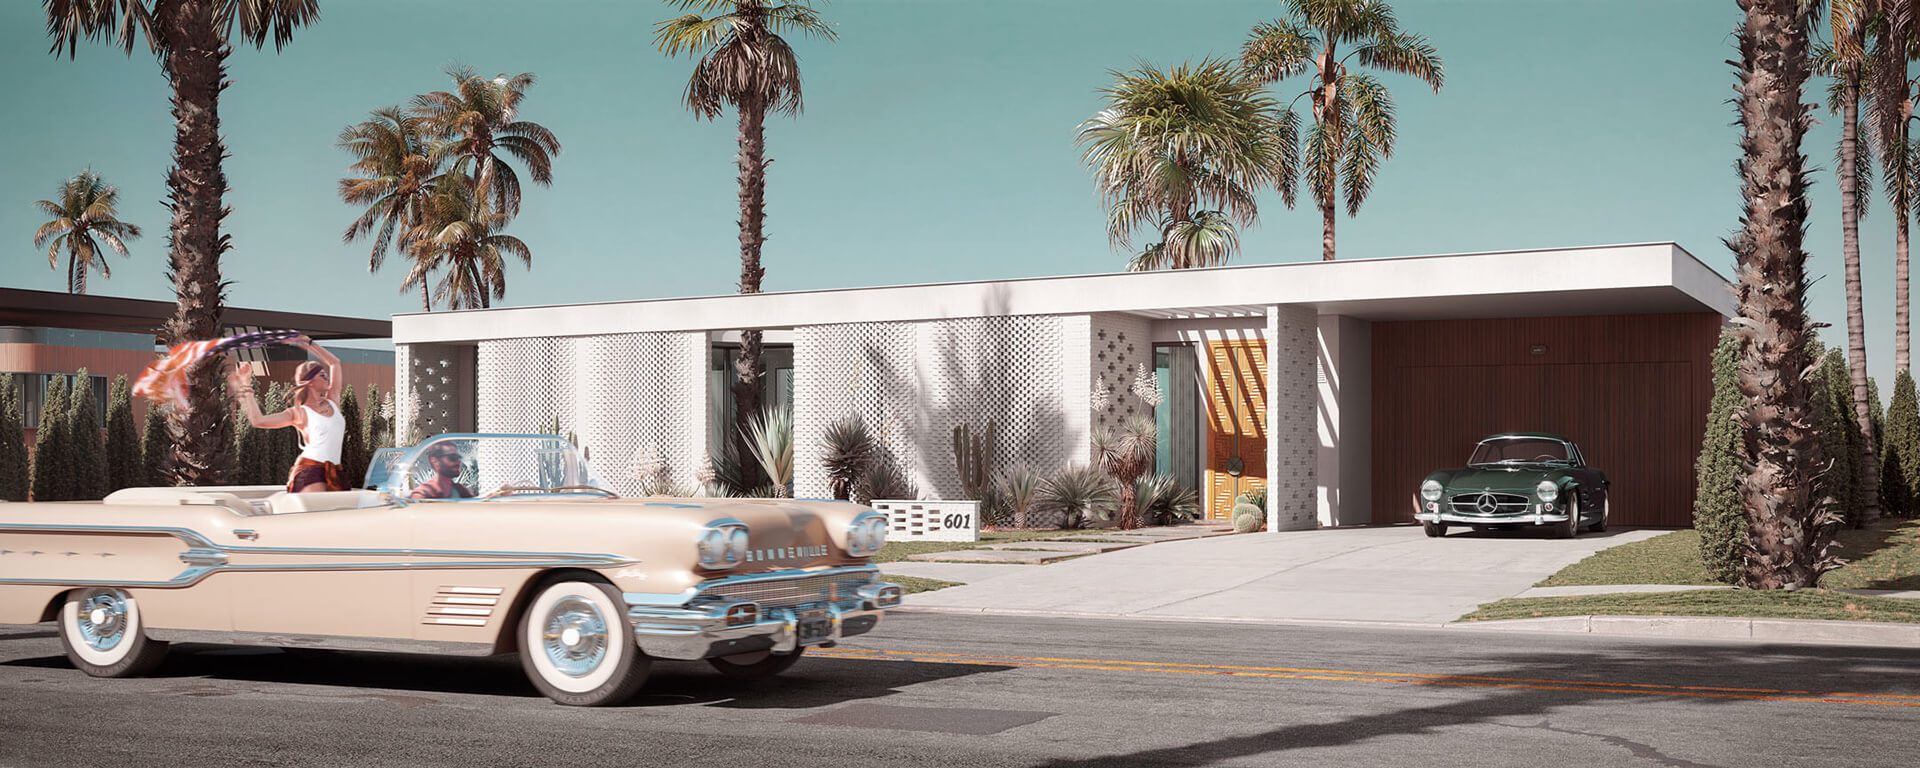 Stylish Exterior CGI of a Californian Residence